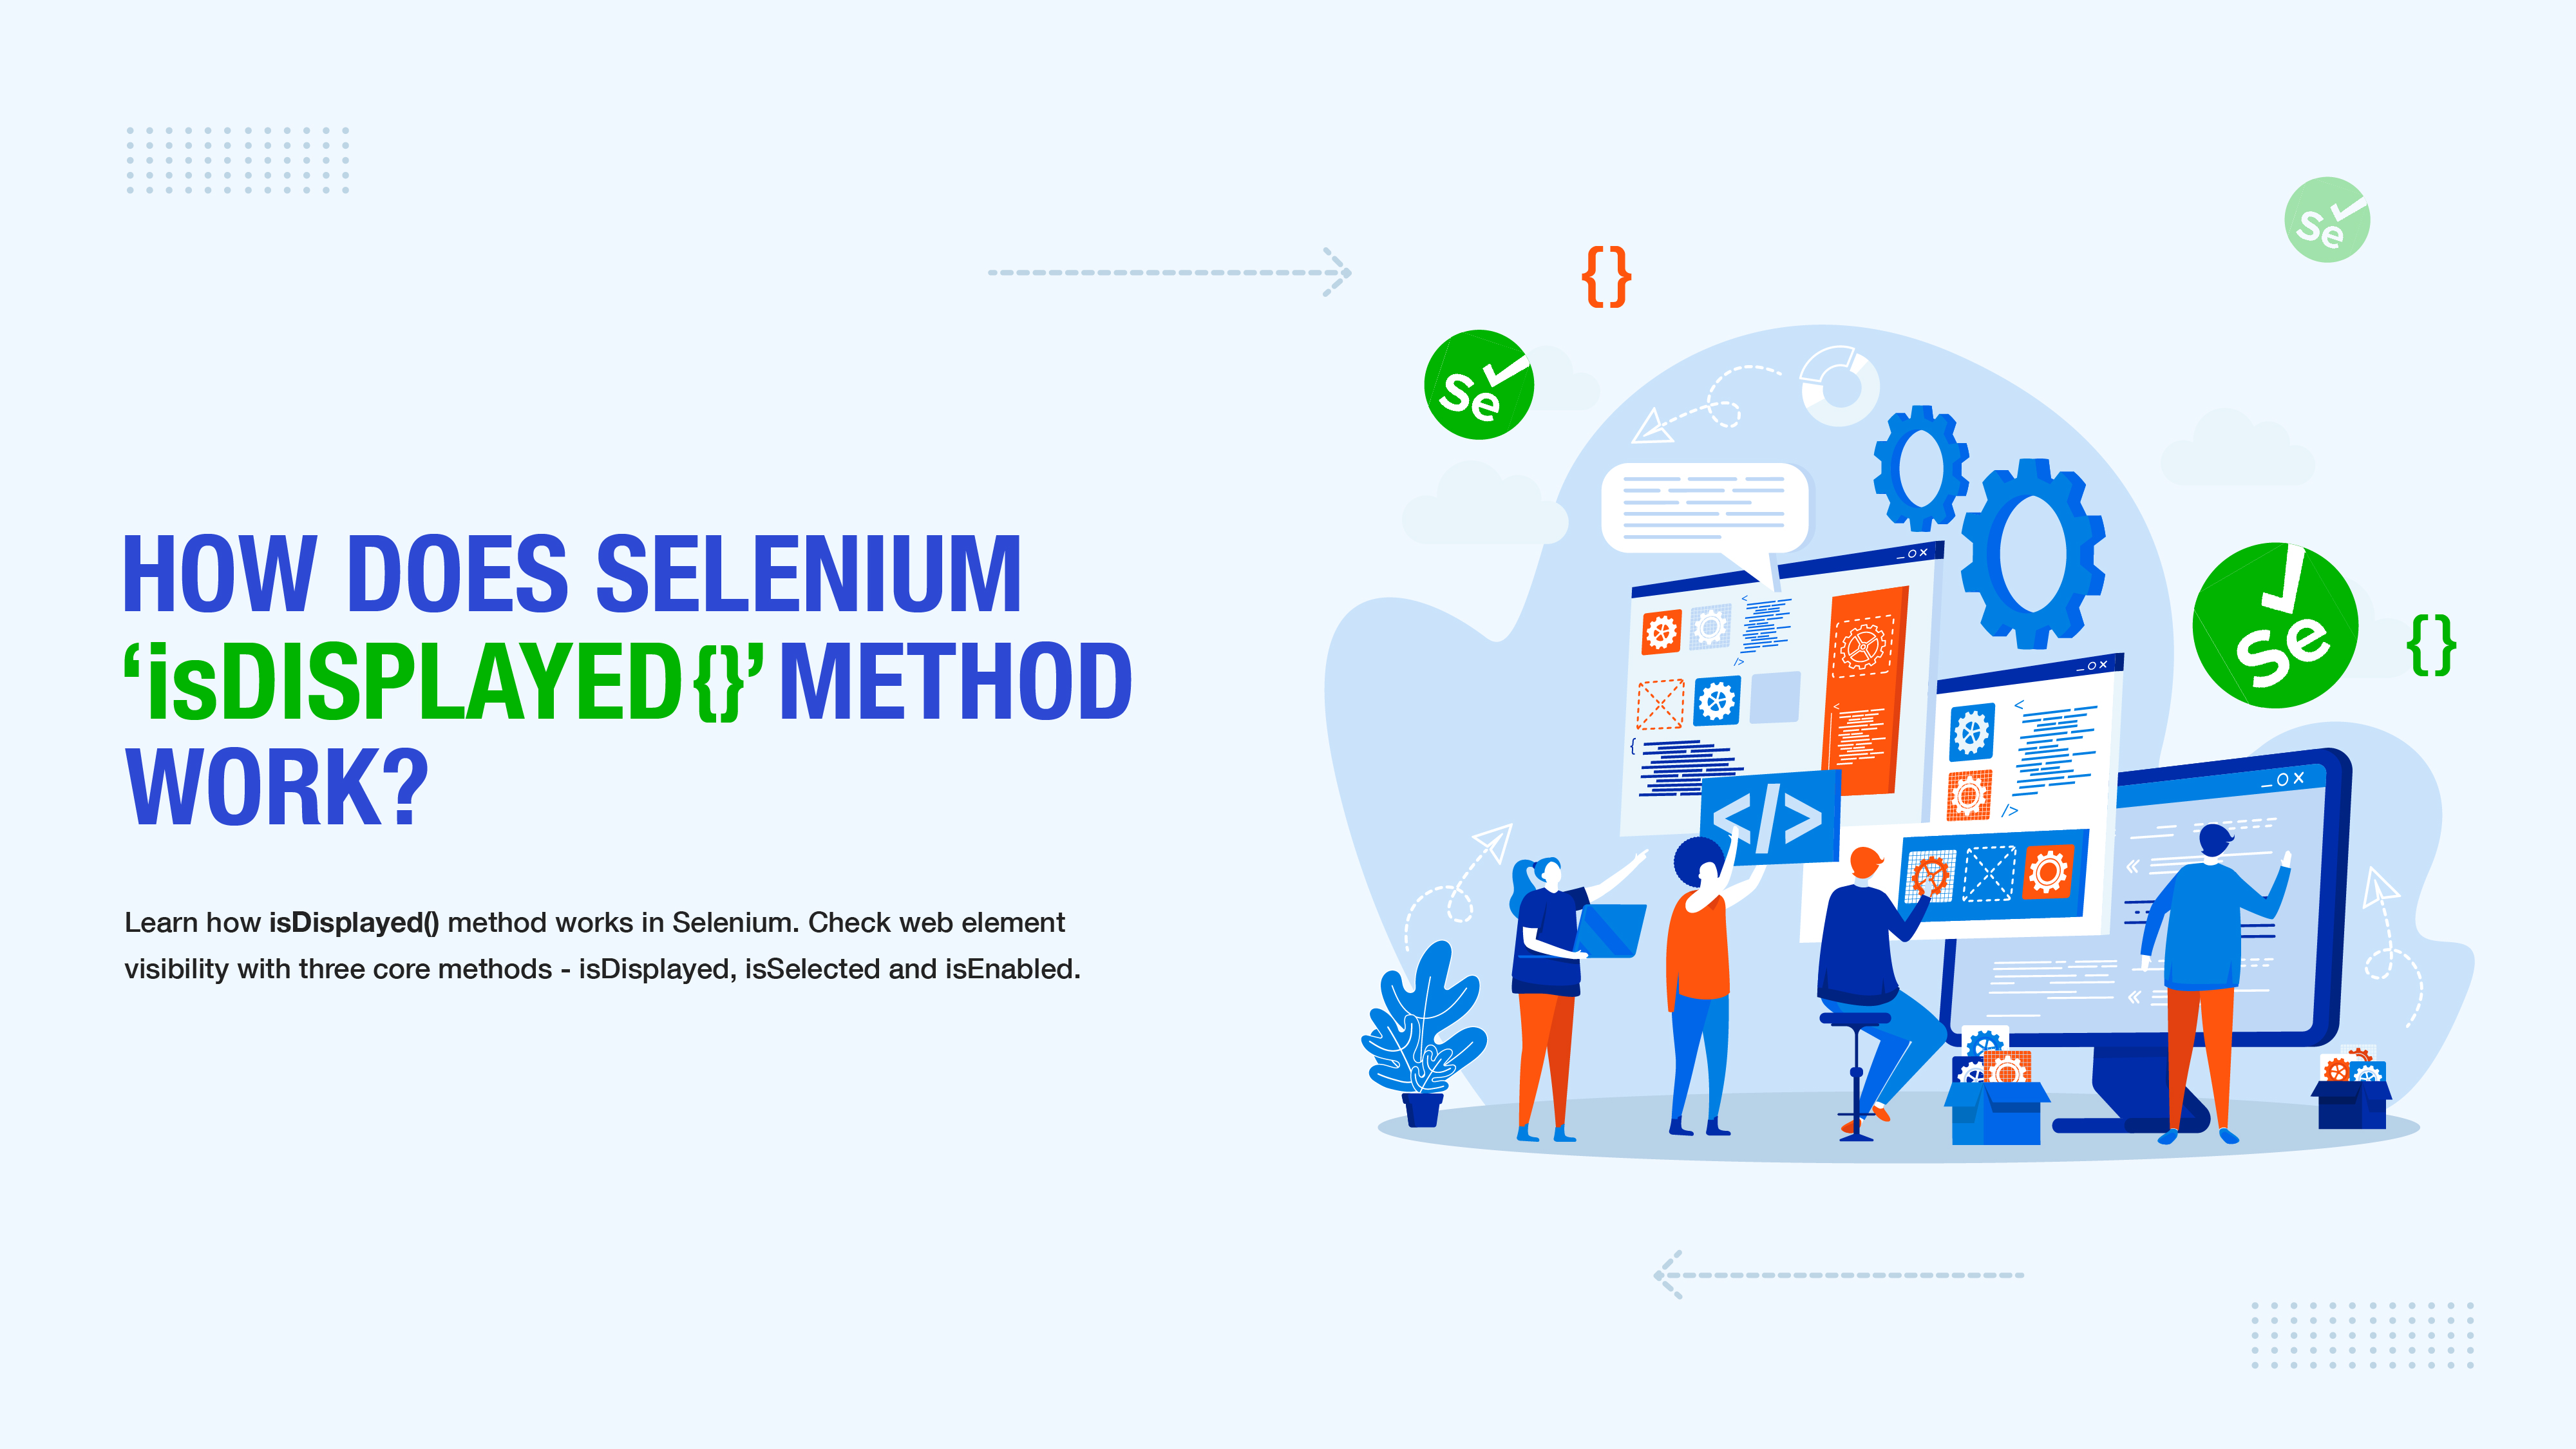 How does Selenium isDisplayed() method work?